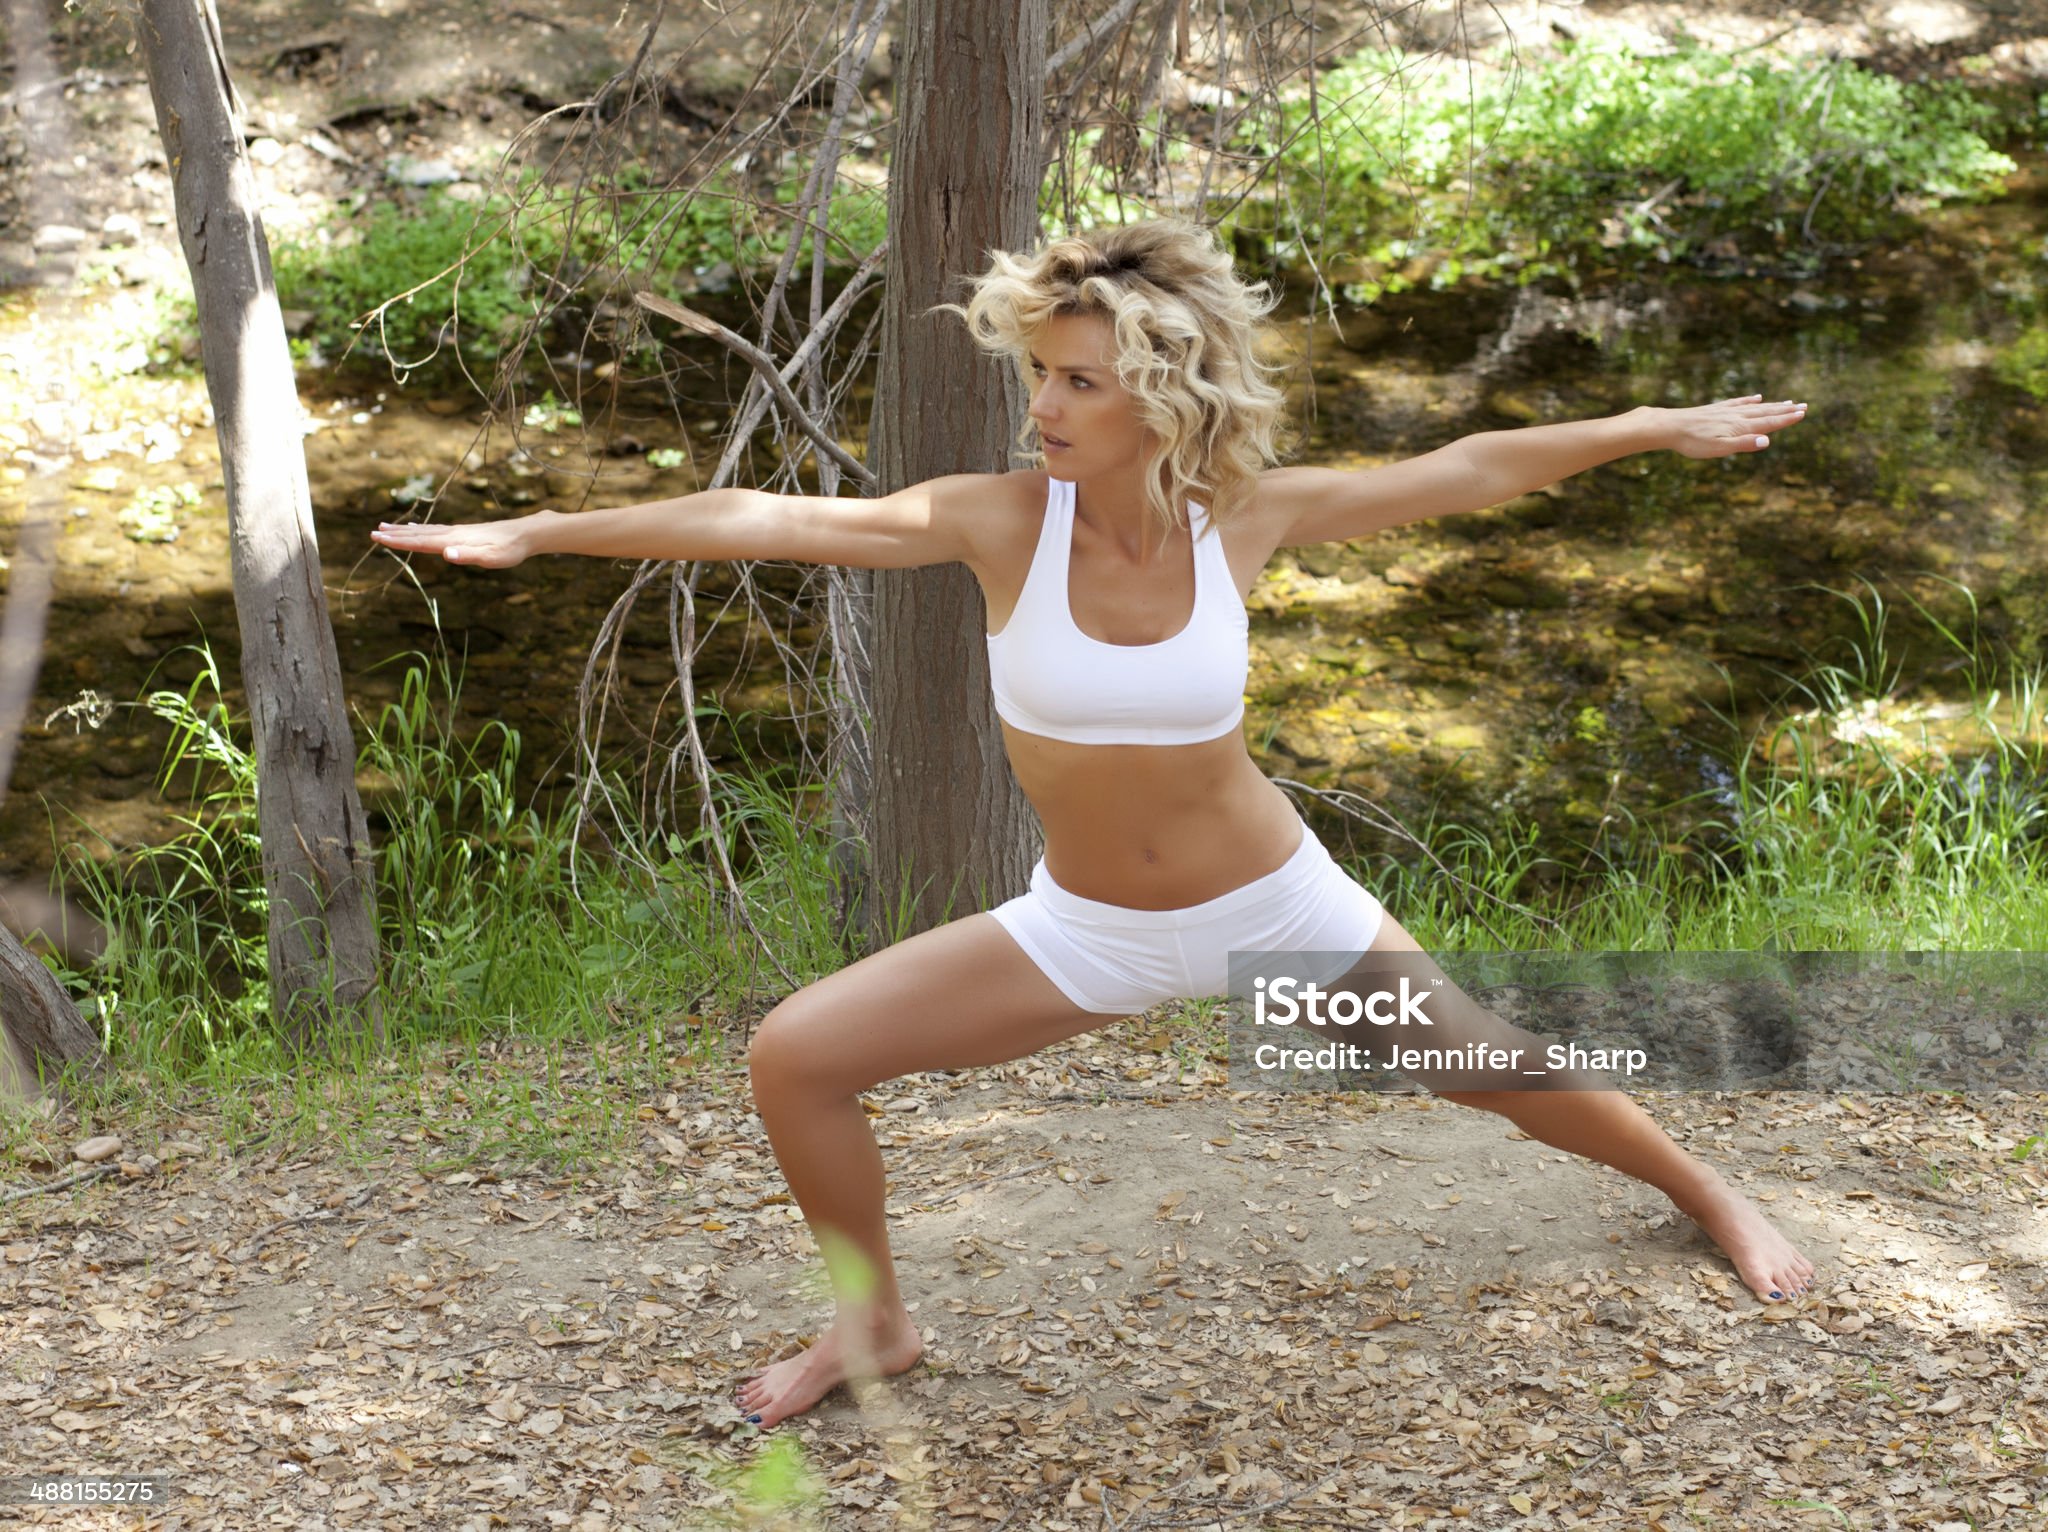 https://media.istockphoto.com/id/488155275/photo/beautiful-woman-doing-yoga-outdoors.jpg?s=2048x2048&amp;w=is&amp;k=20&amp;c=bf9IAWpBLNNkDEiKLPq5pohVcafgnC_IMdJr7GTePOc=